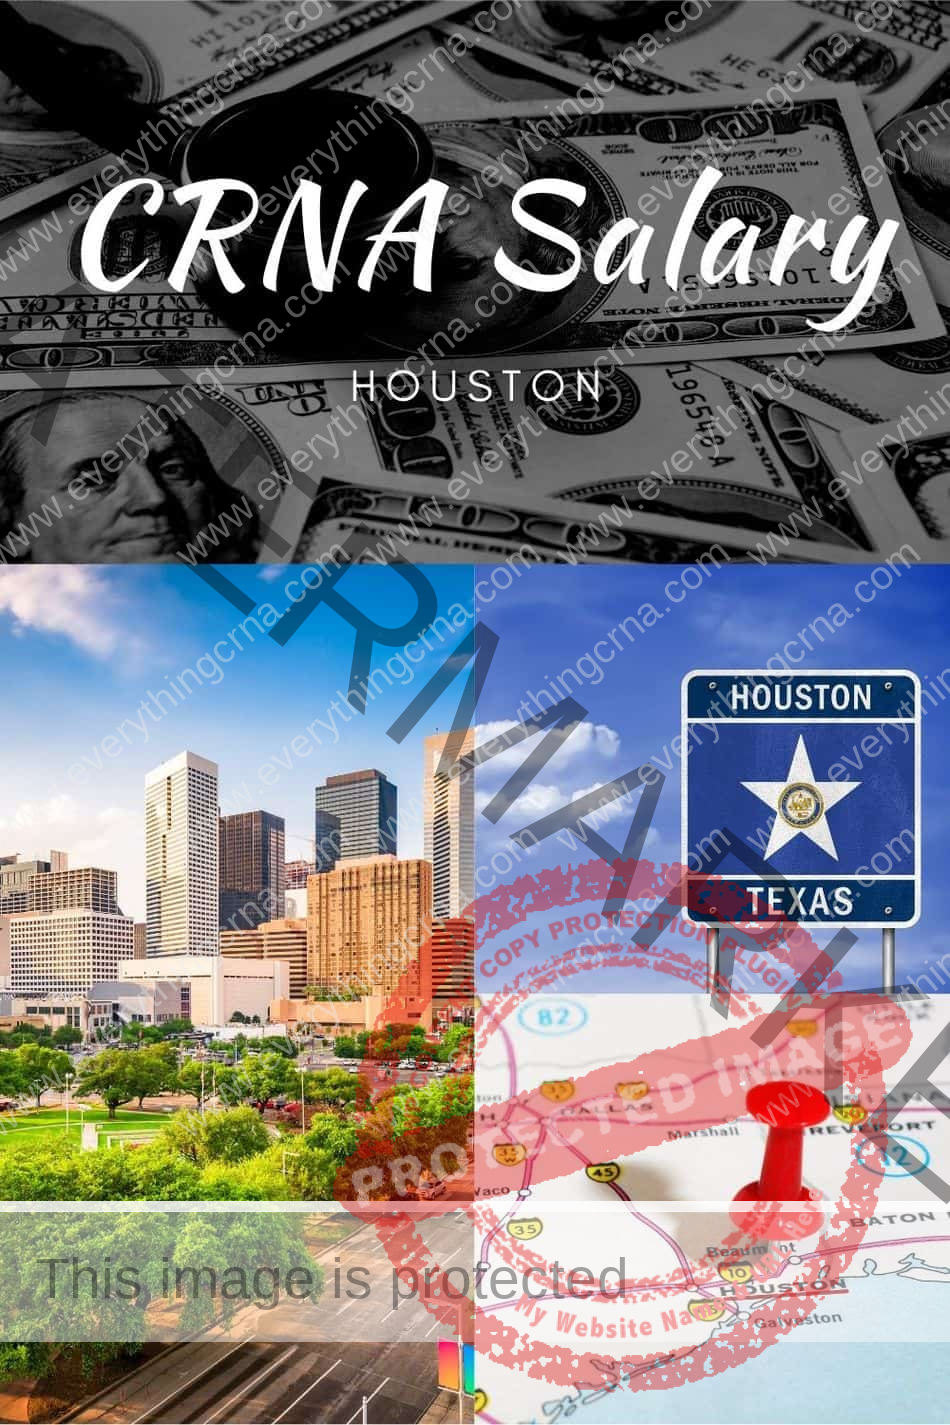 CRNA Salary in Houston